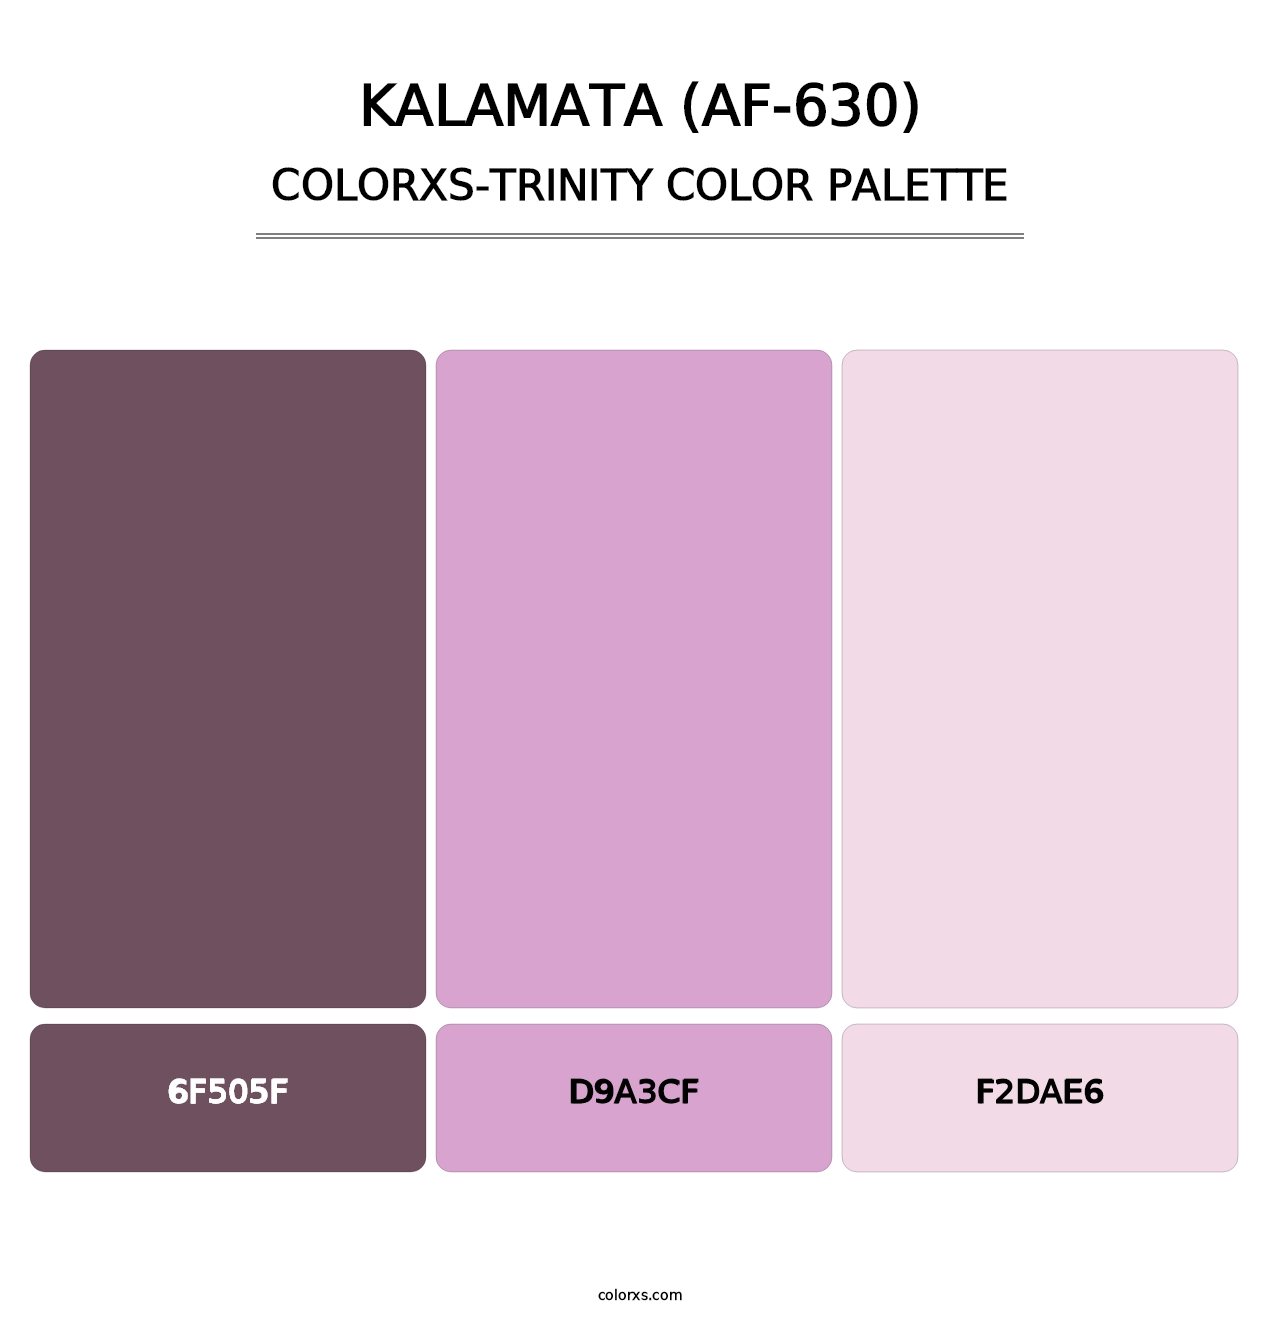 Kalamata (AF-630) - Colorxs Trinity Palette